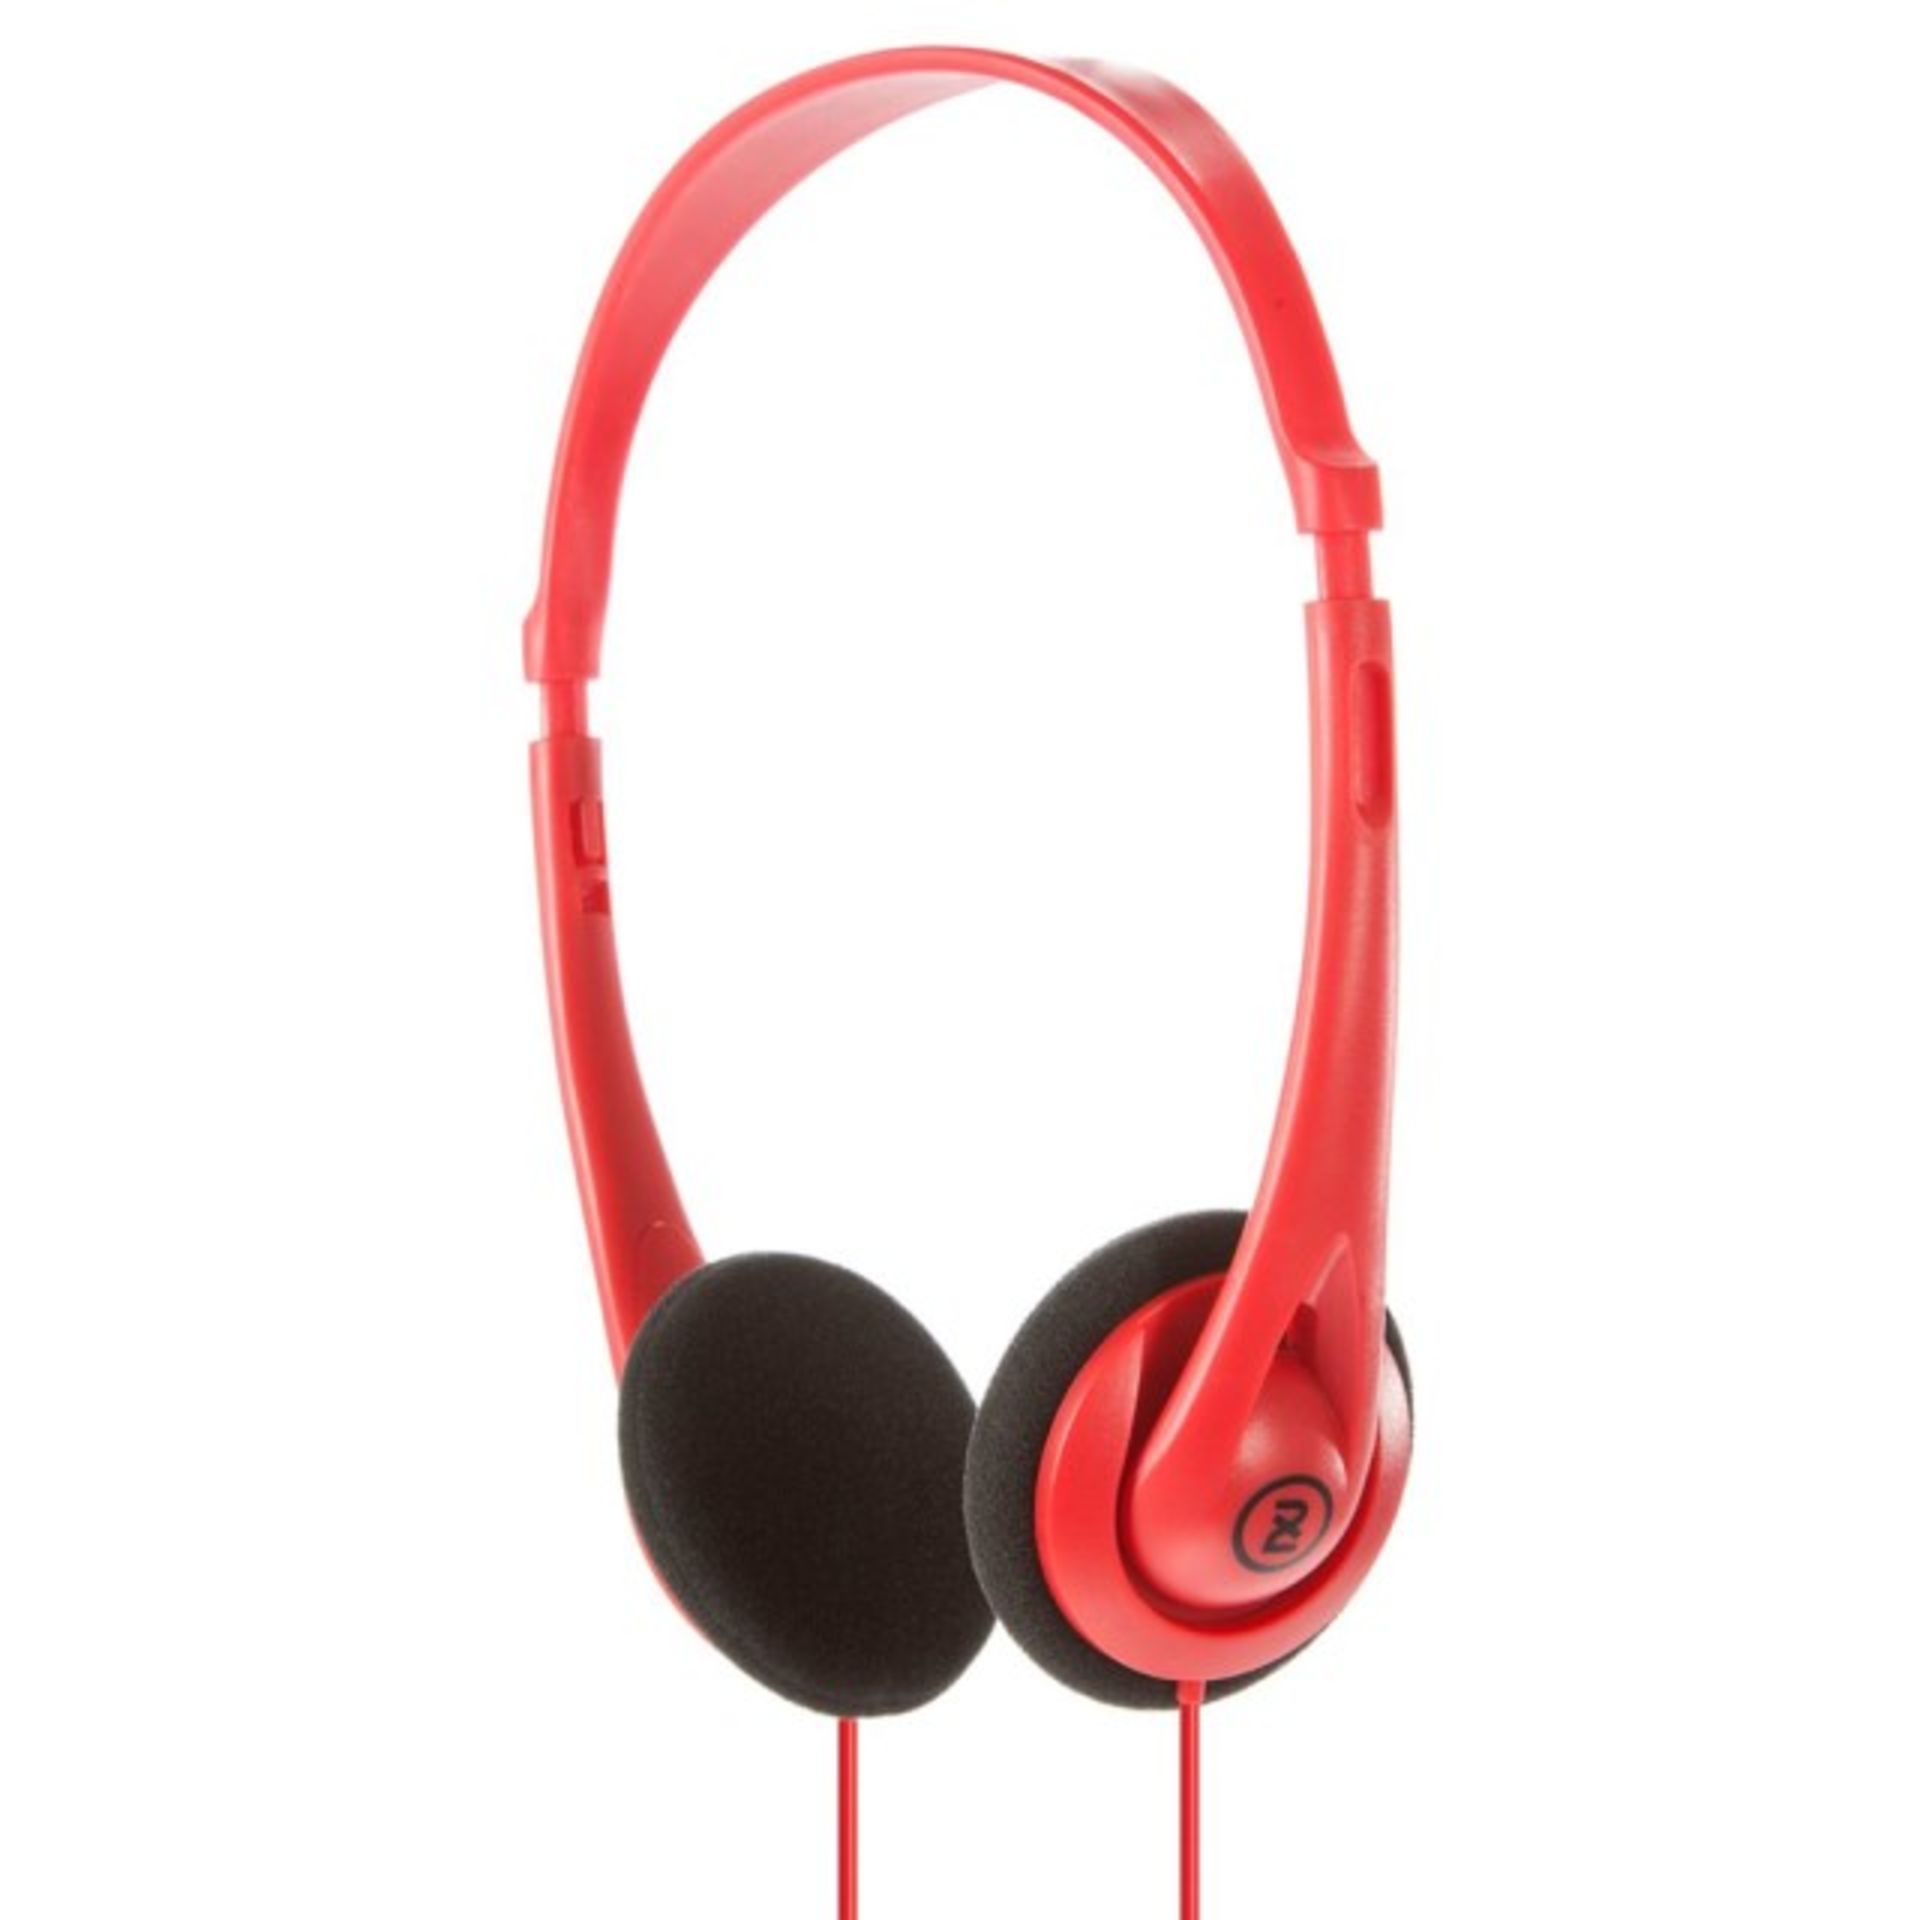 V *TRADE QTY* Brand New Skullcandy 2XL Wage Red Headphones With Adjustable Headband X 4 Bid price to